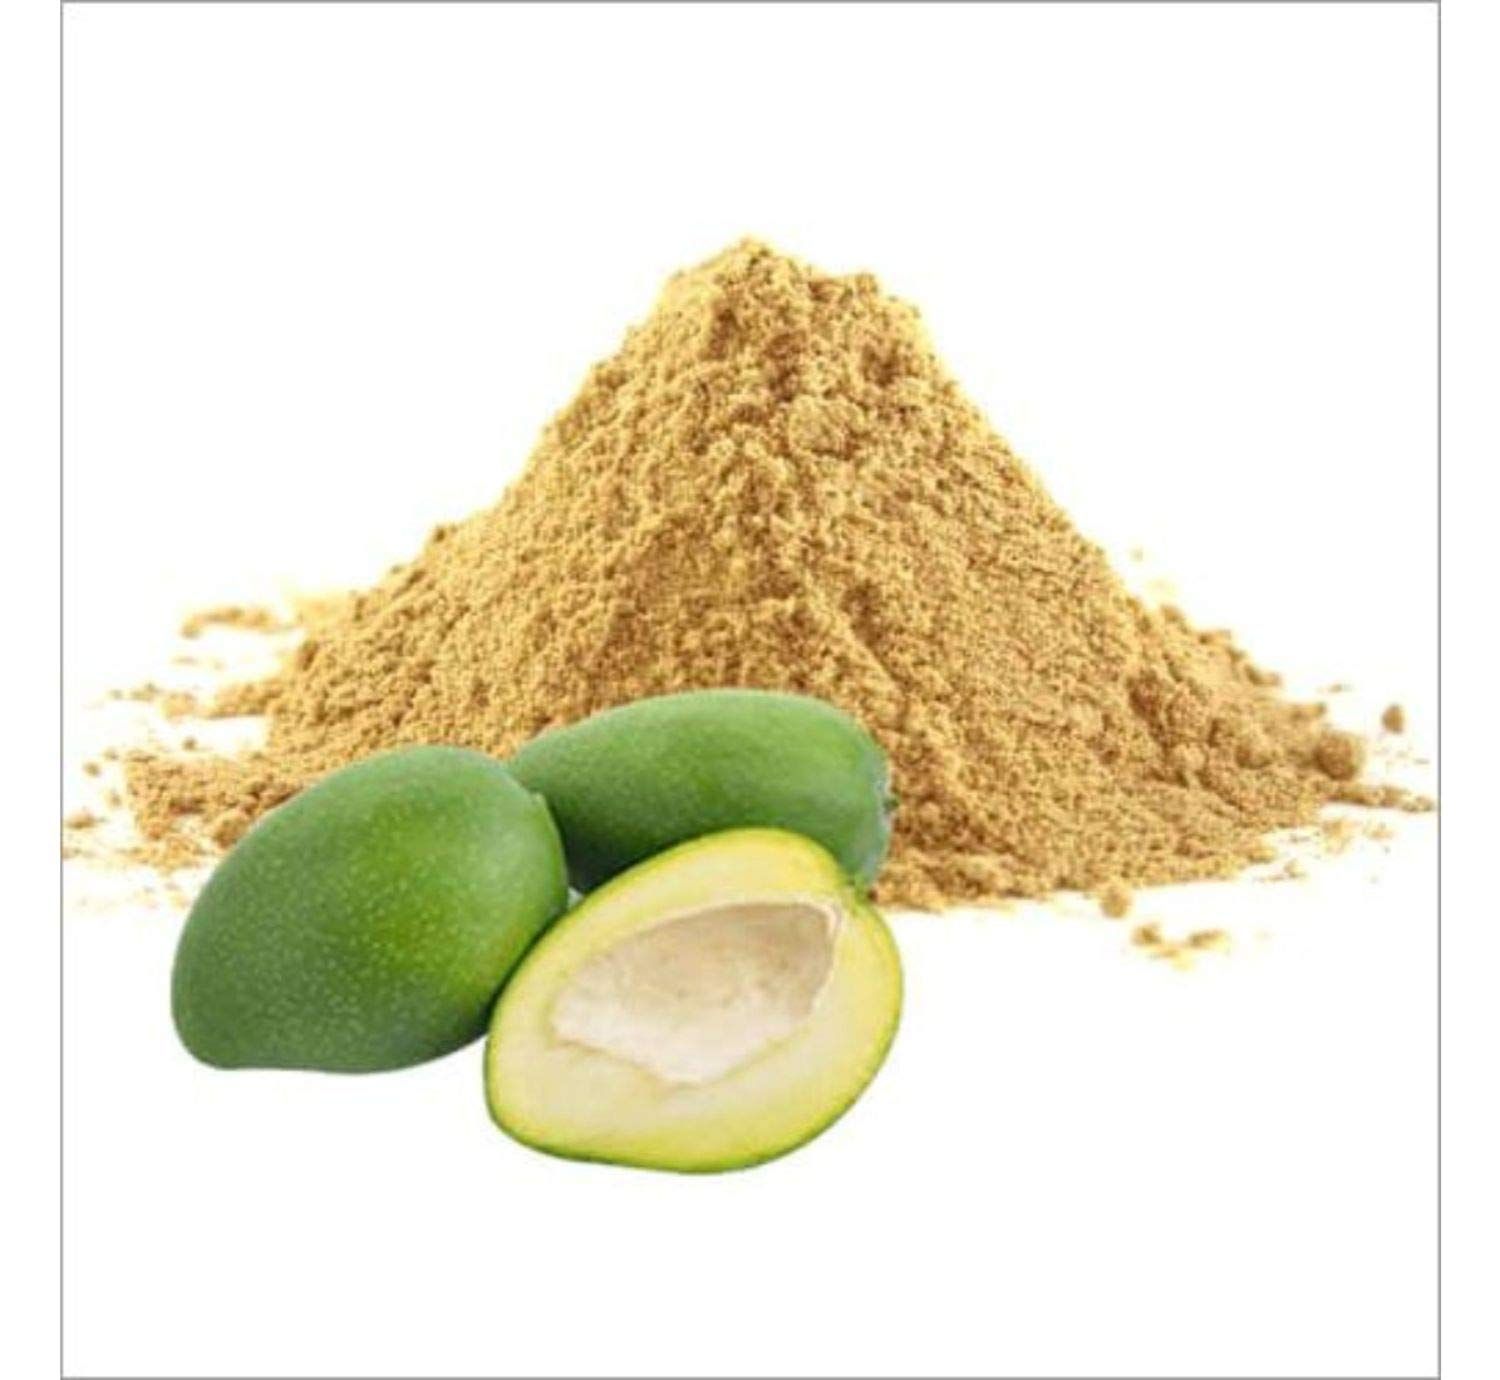 Dry Mango Powder Image